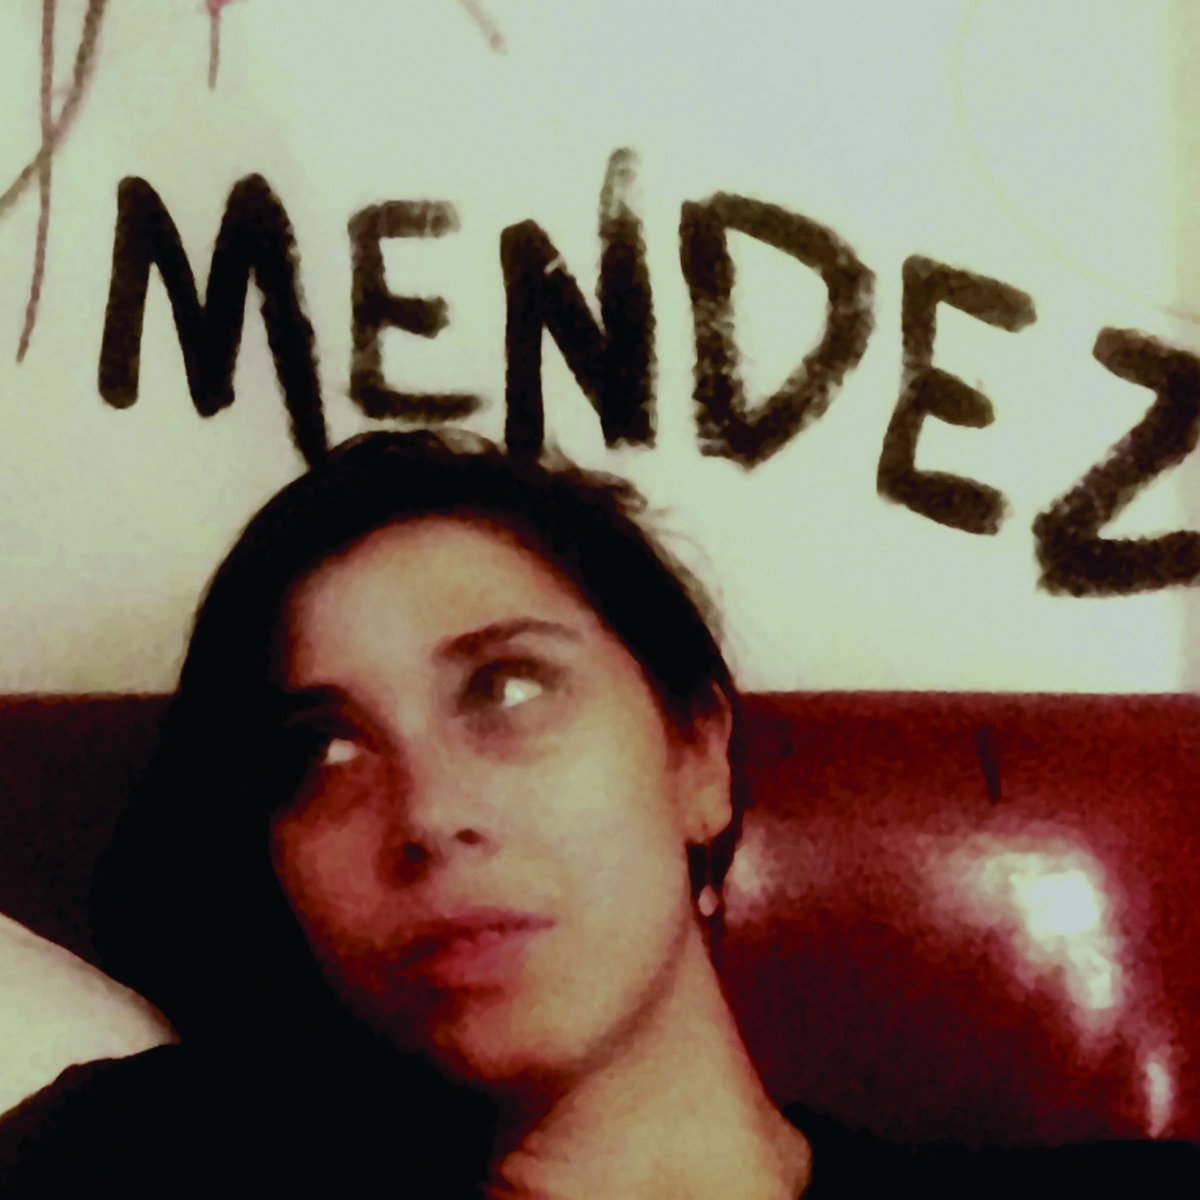 Mendez -/ picture pic